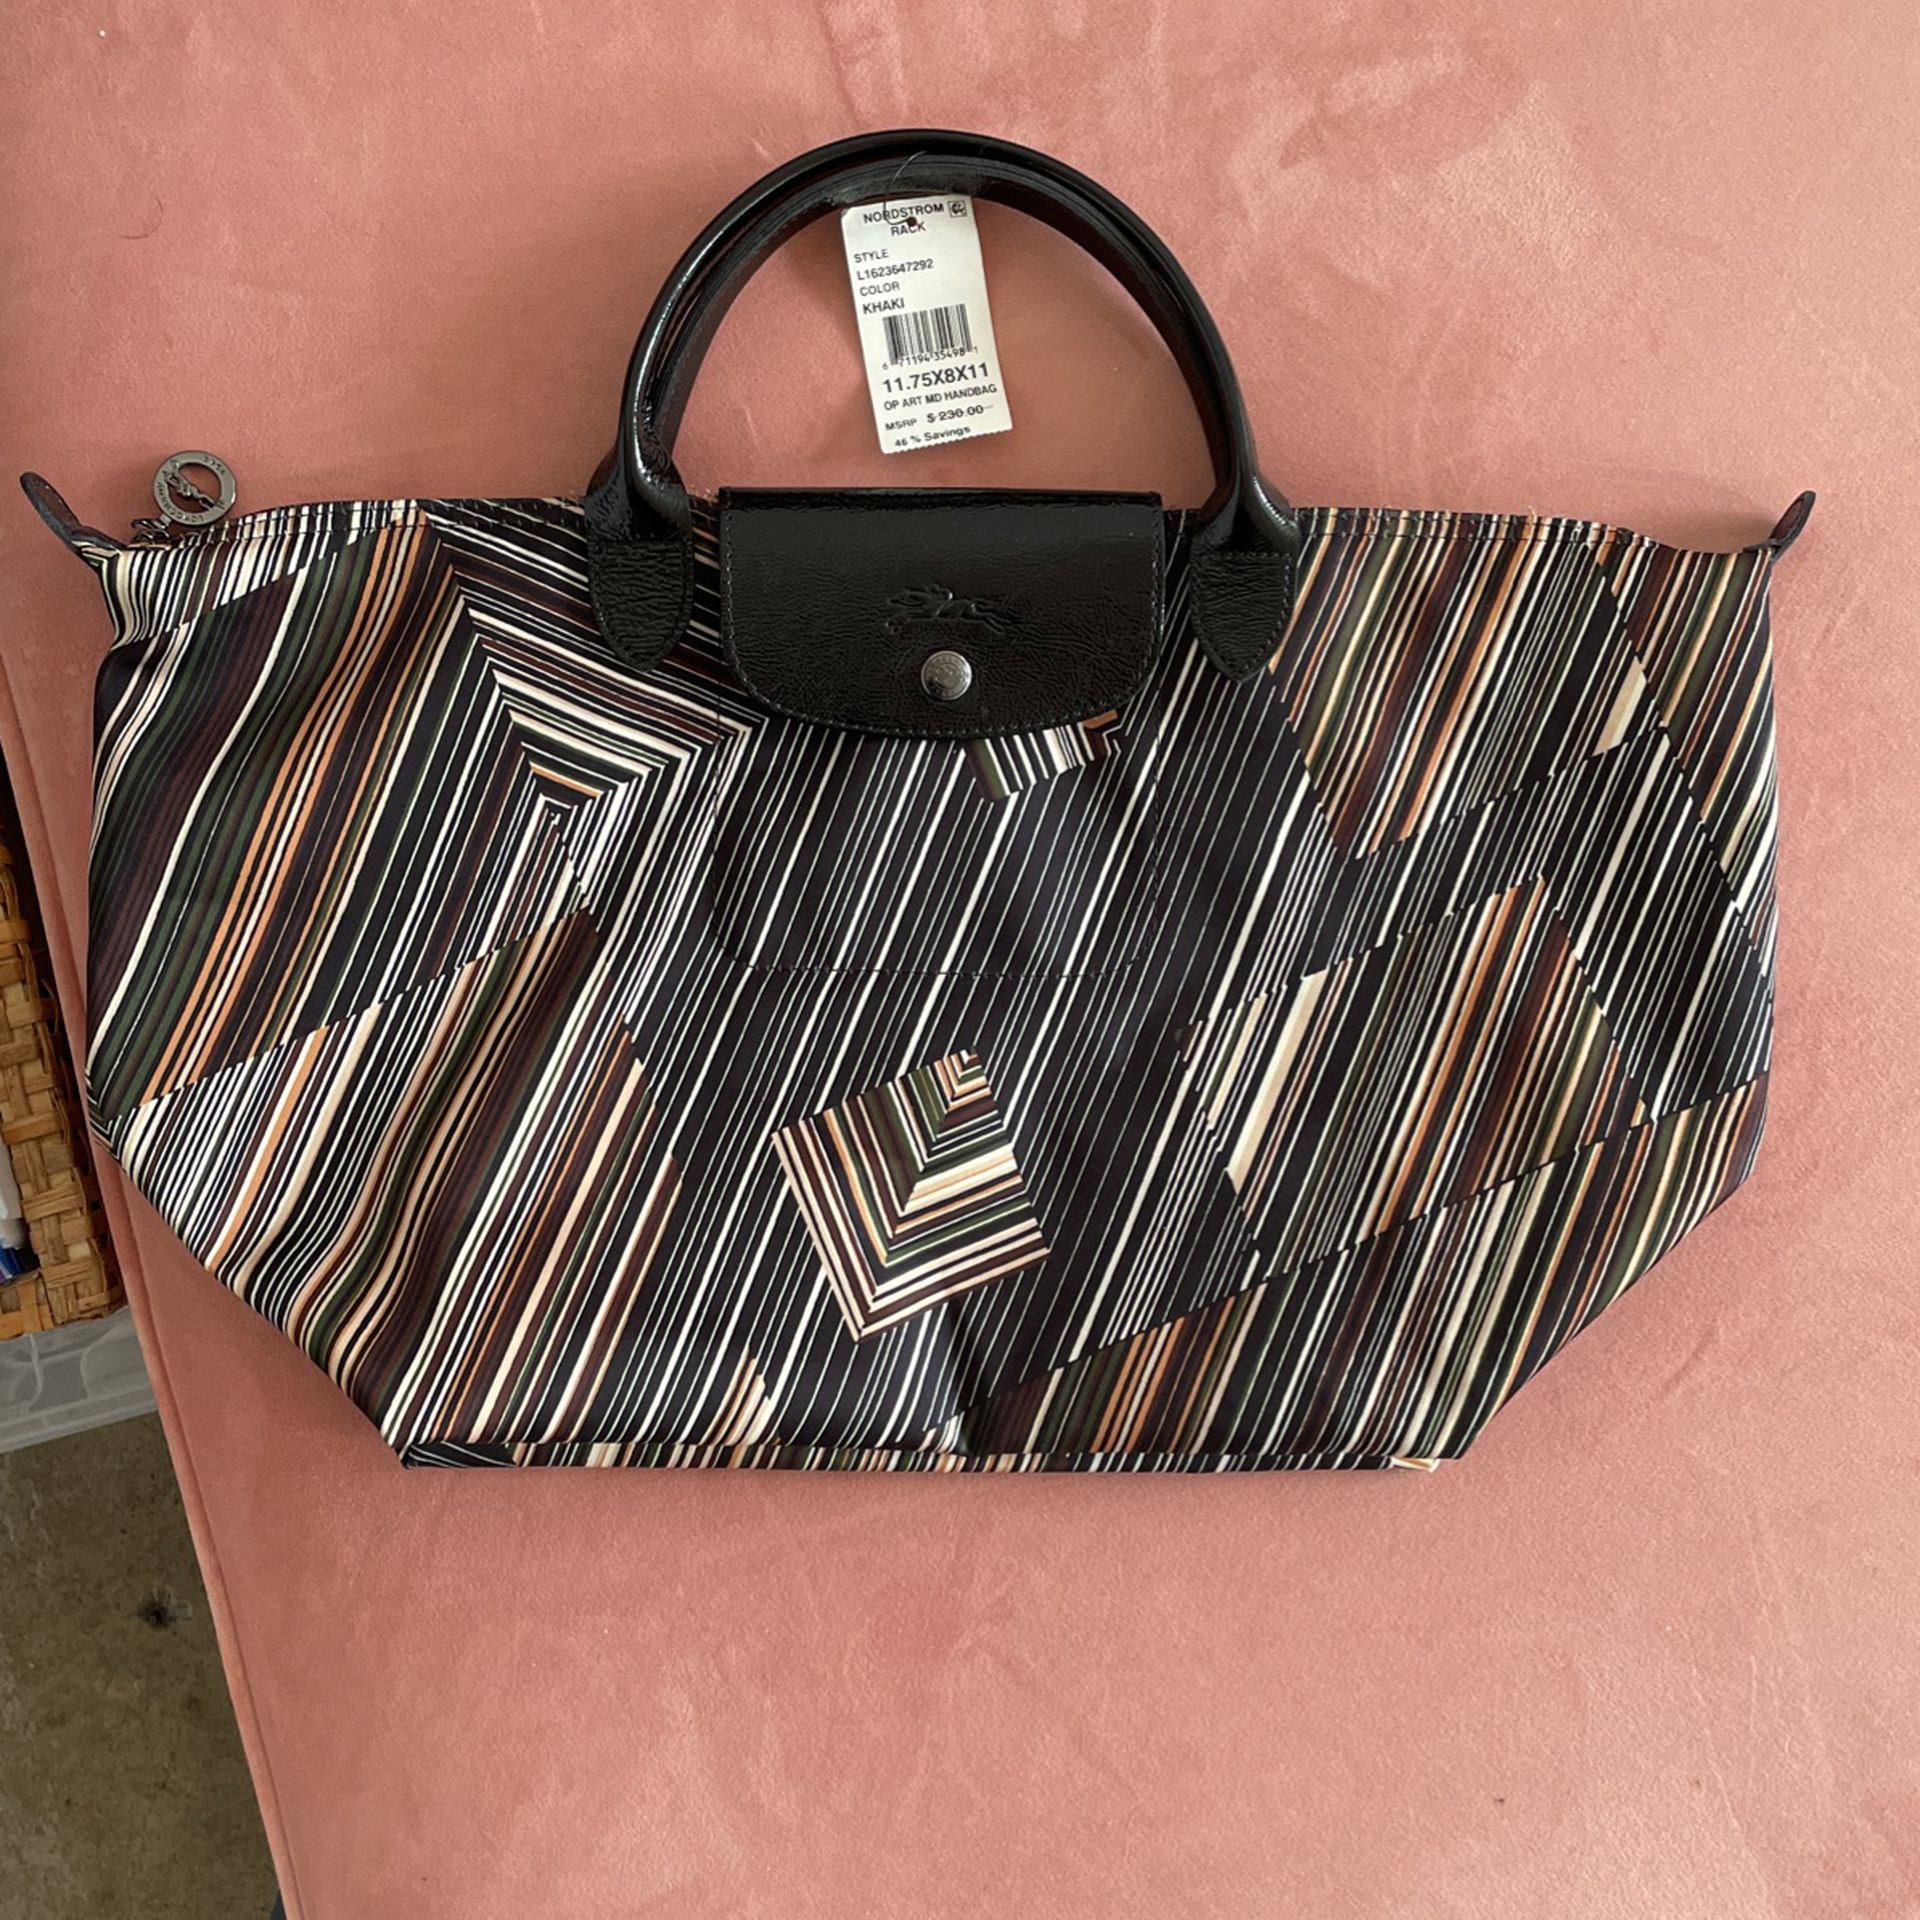 Longchamp Handbag Purse $80 New Never Used 